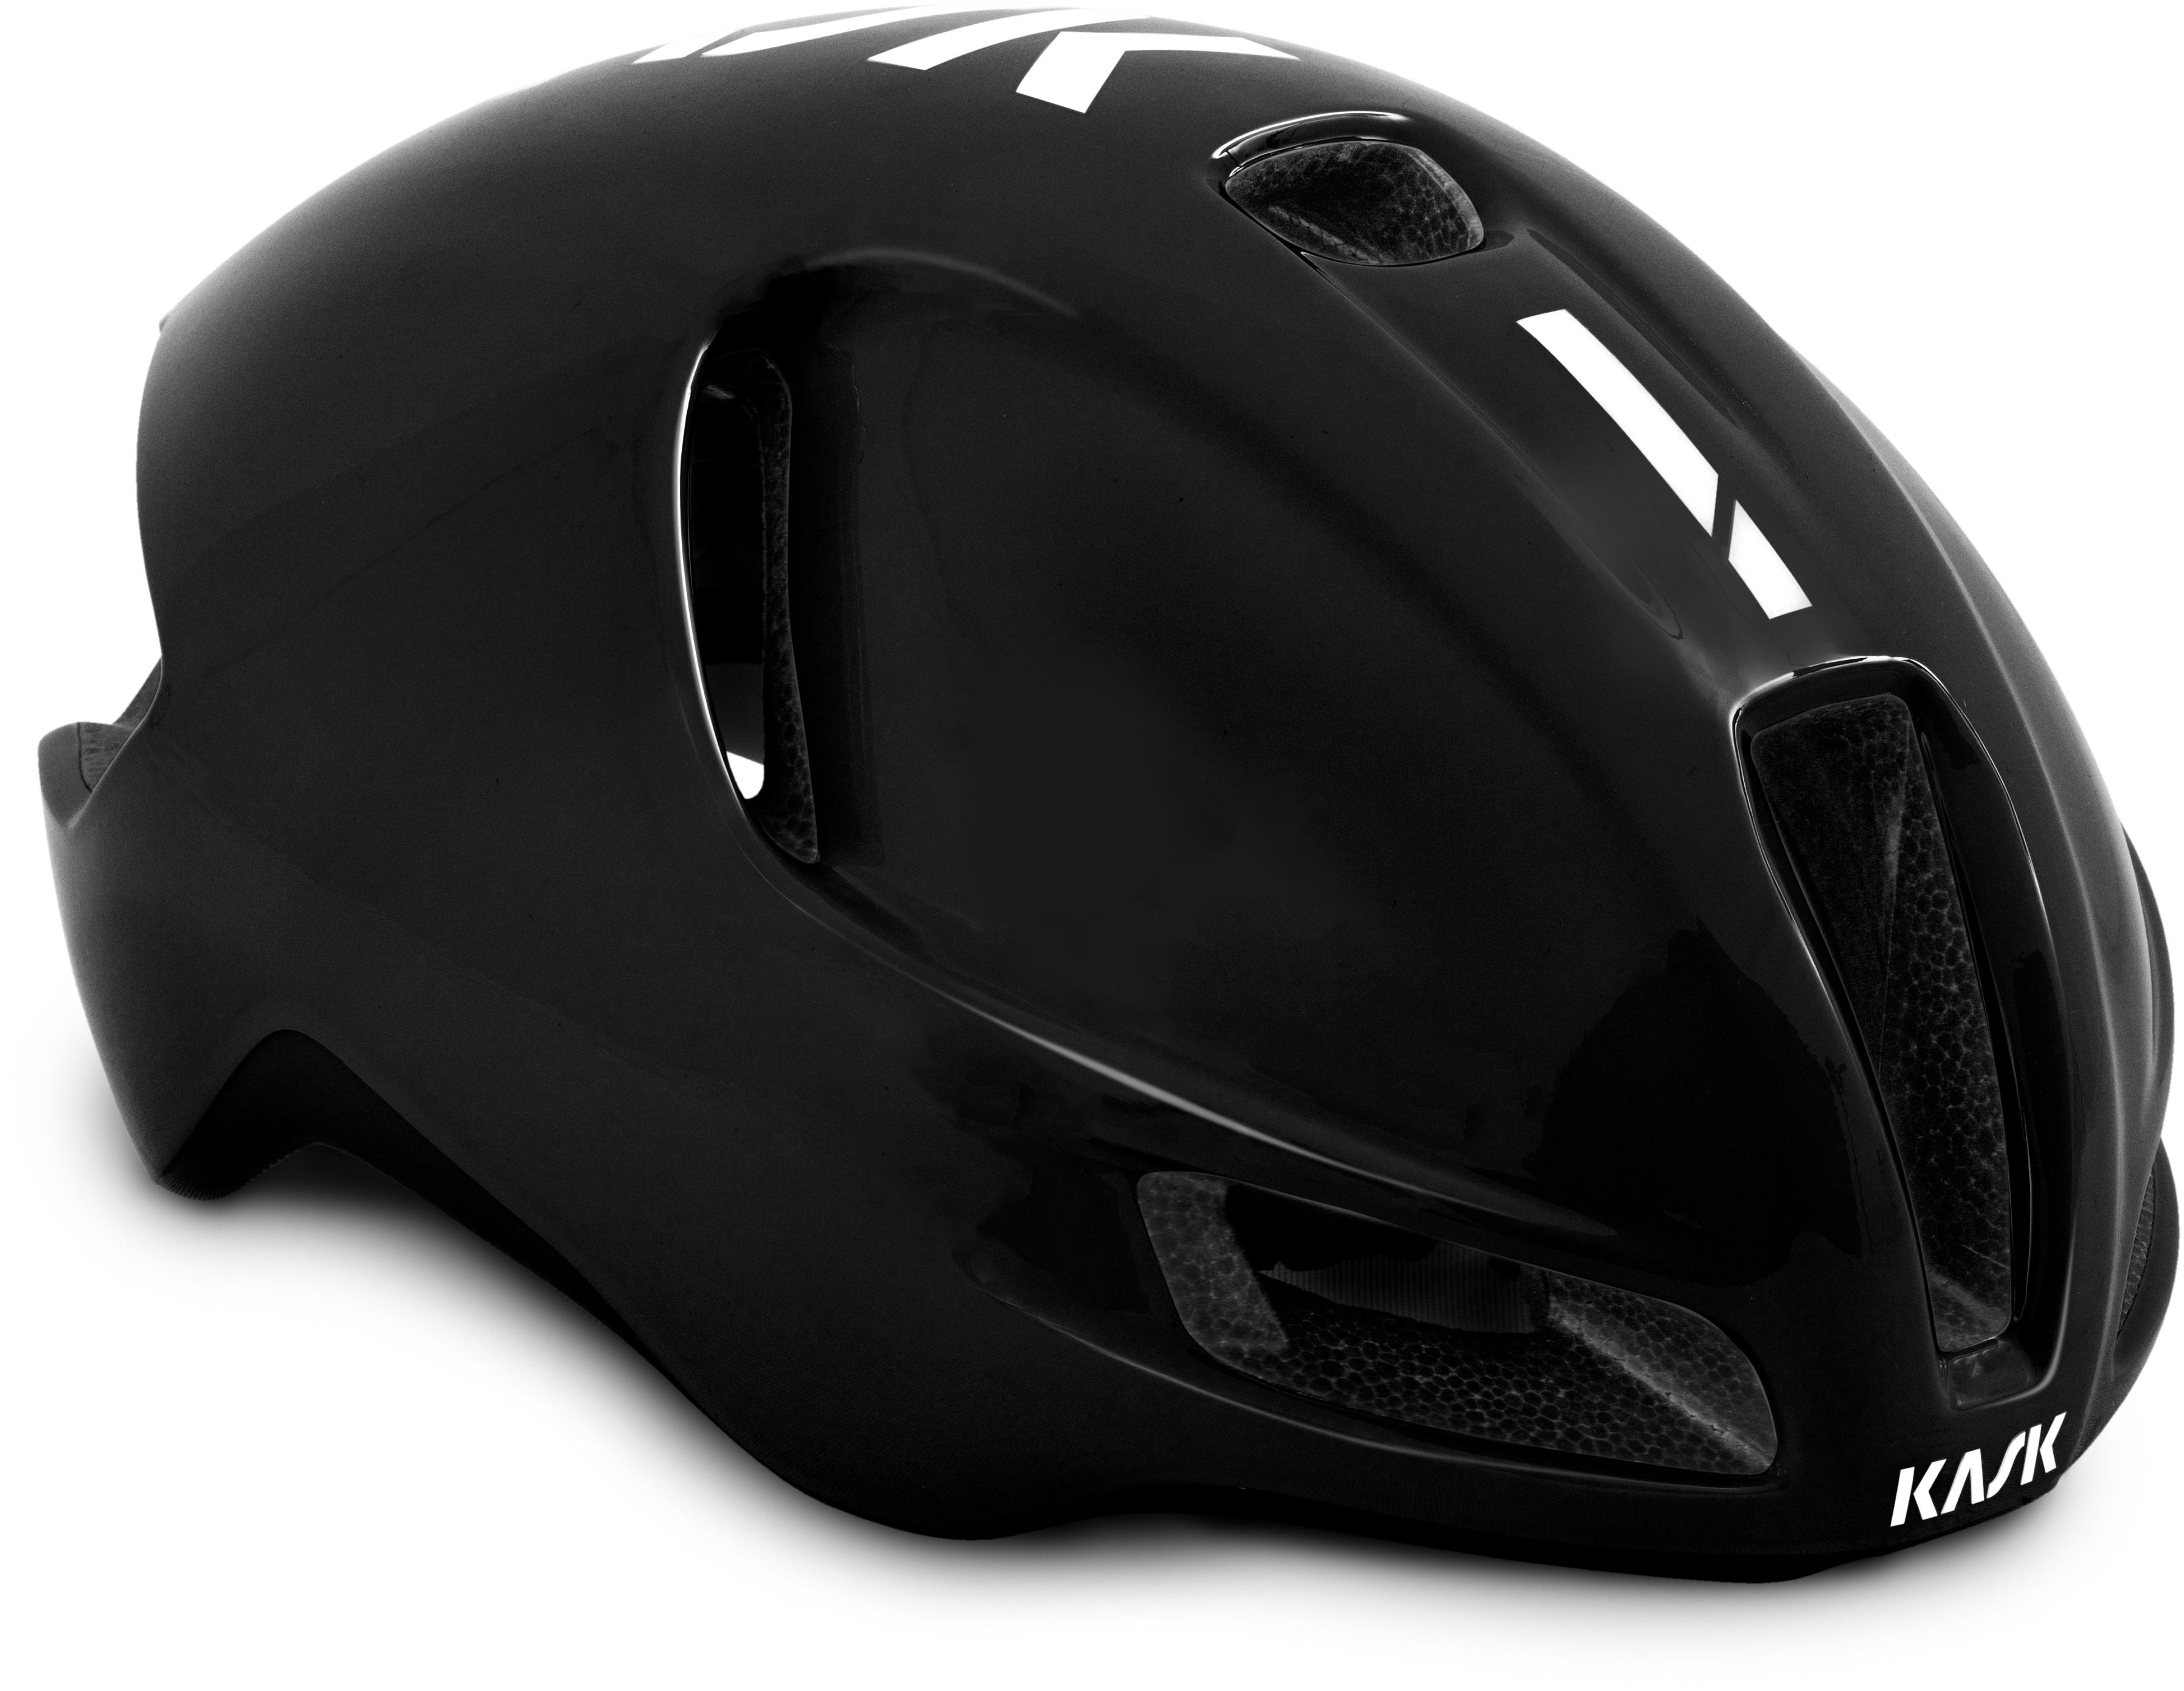 Kask Utopia Road Helmet Black/White, Medium